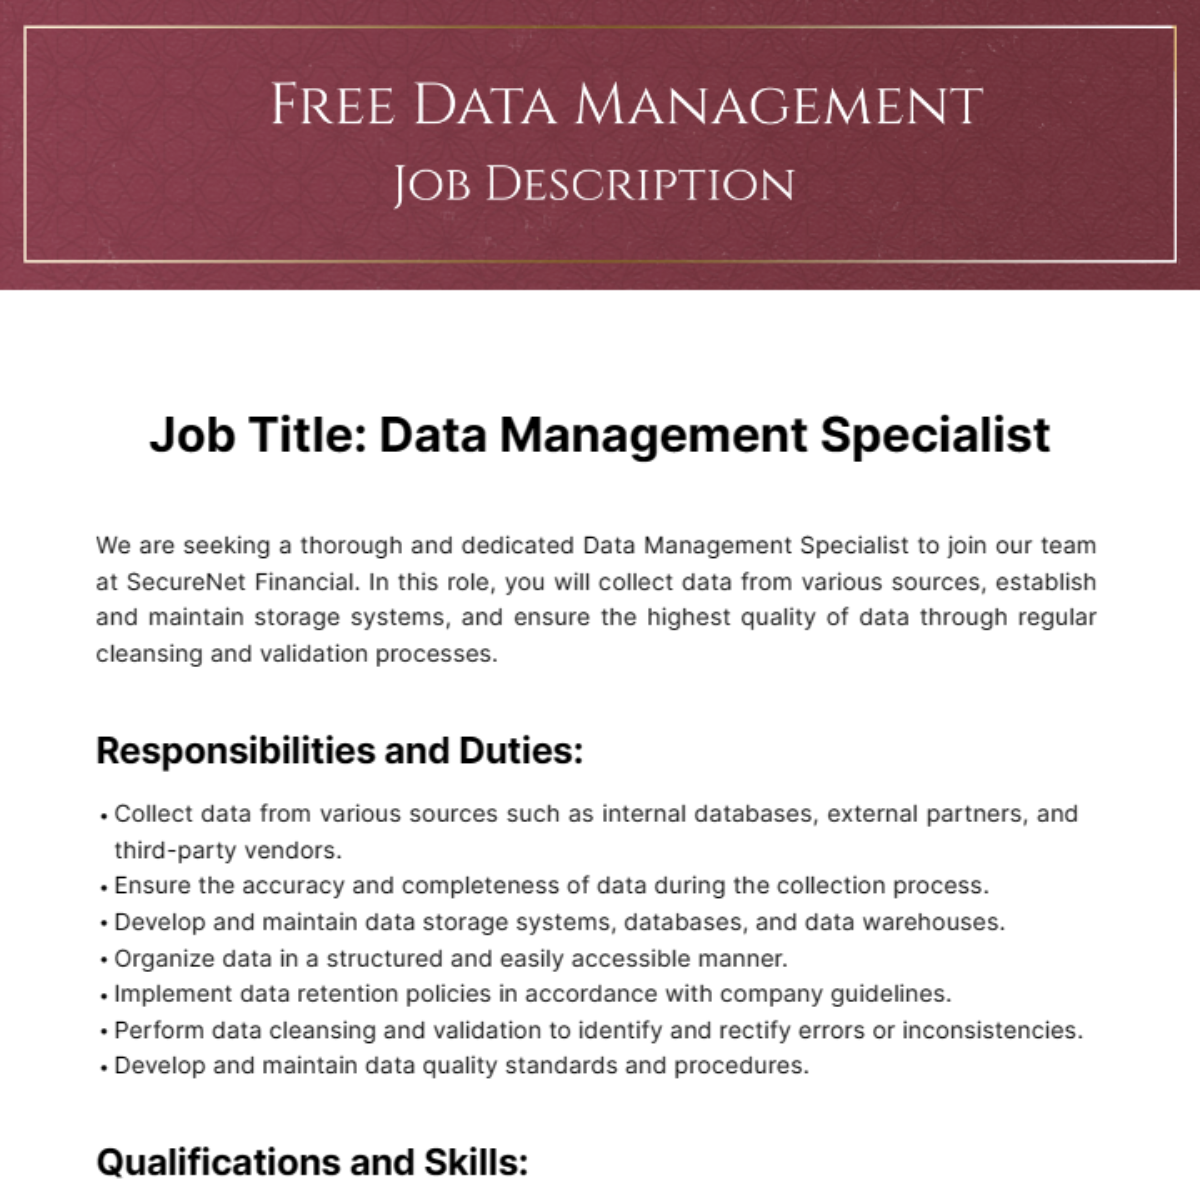 Data Management Job Description Template